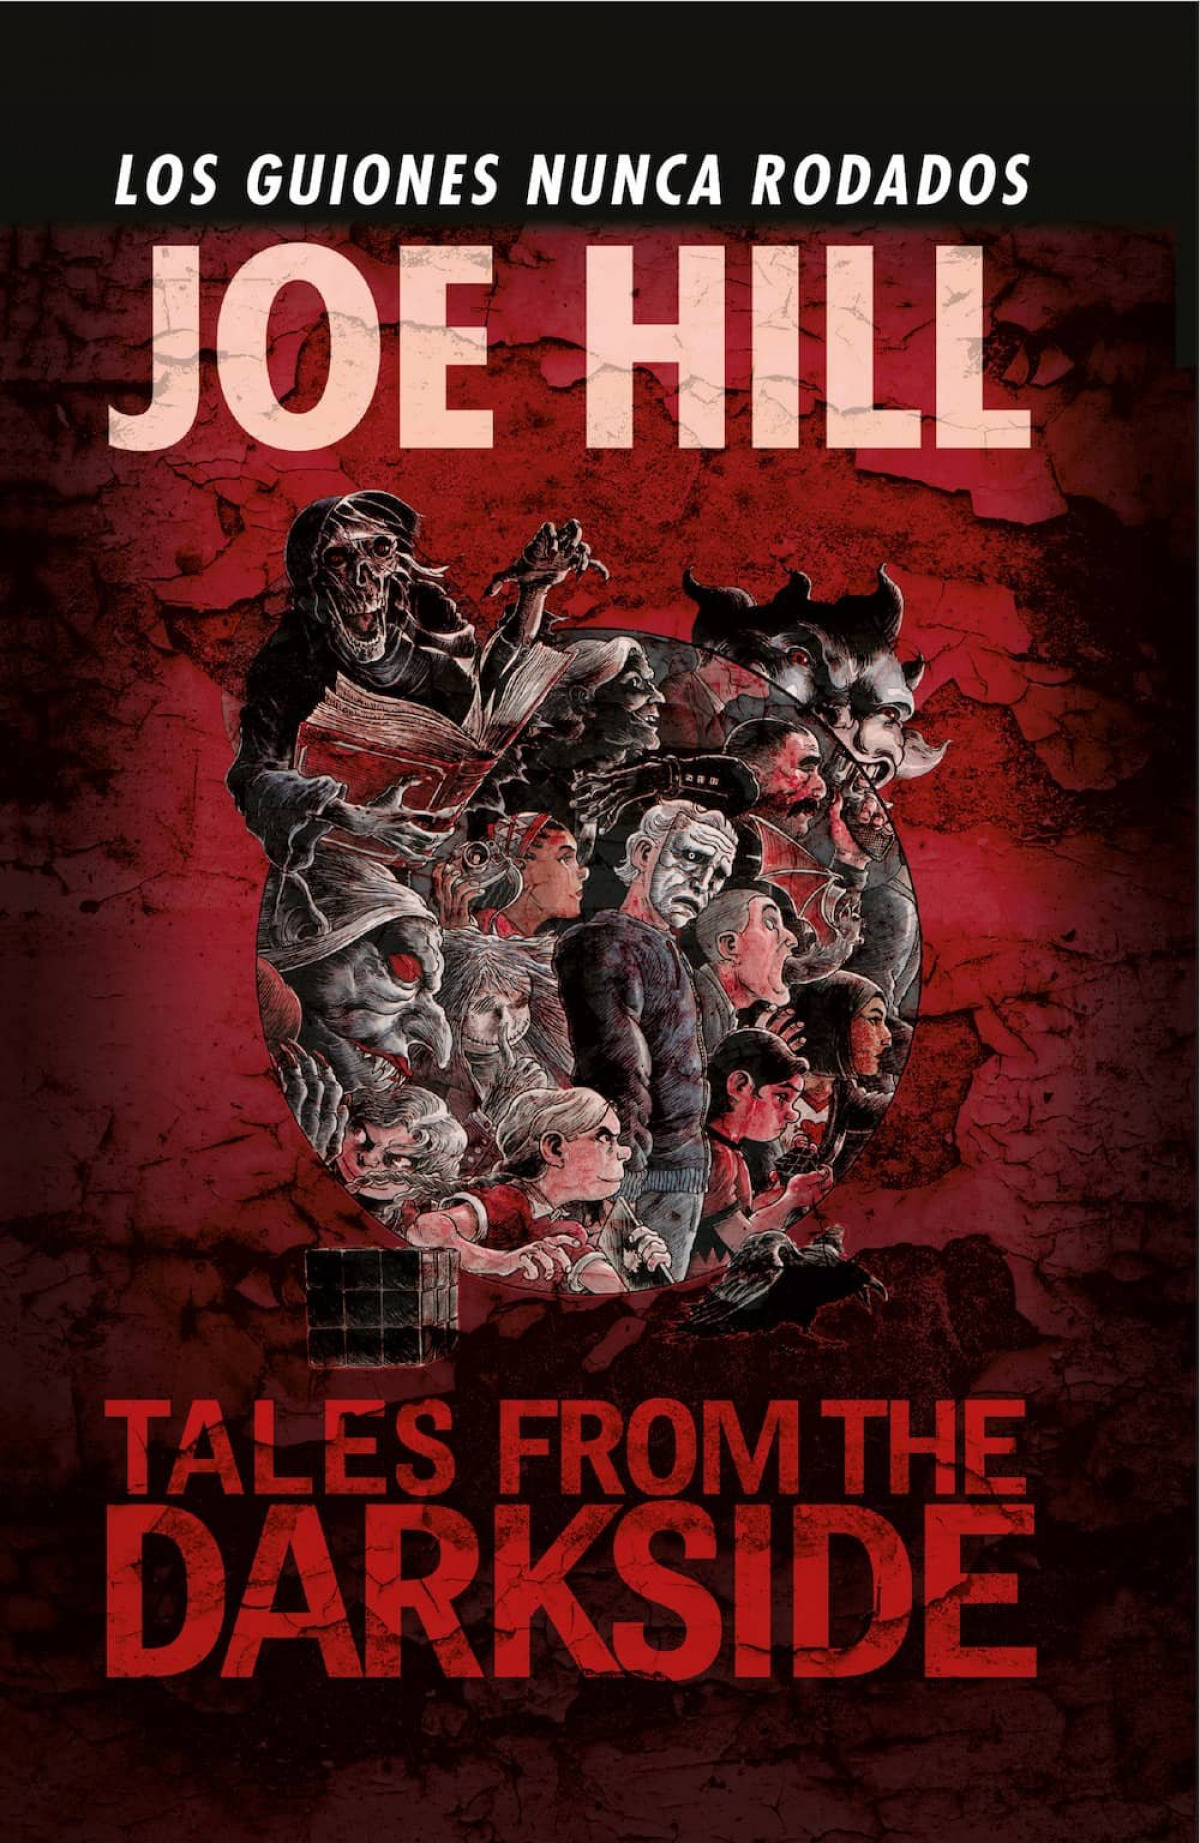 Tales from the darkside - Hill, Joe